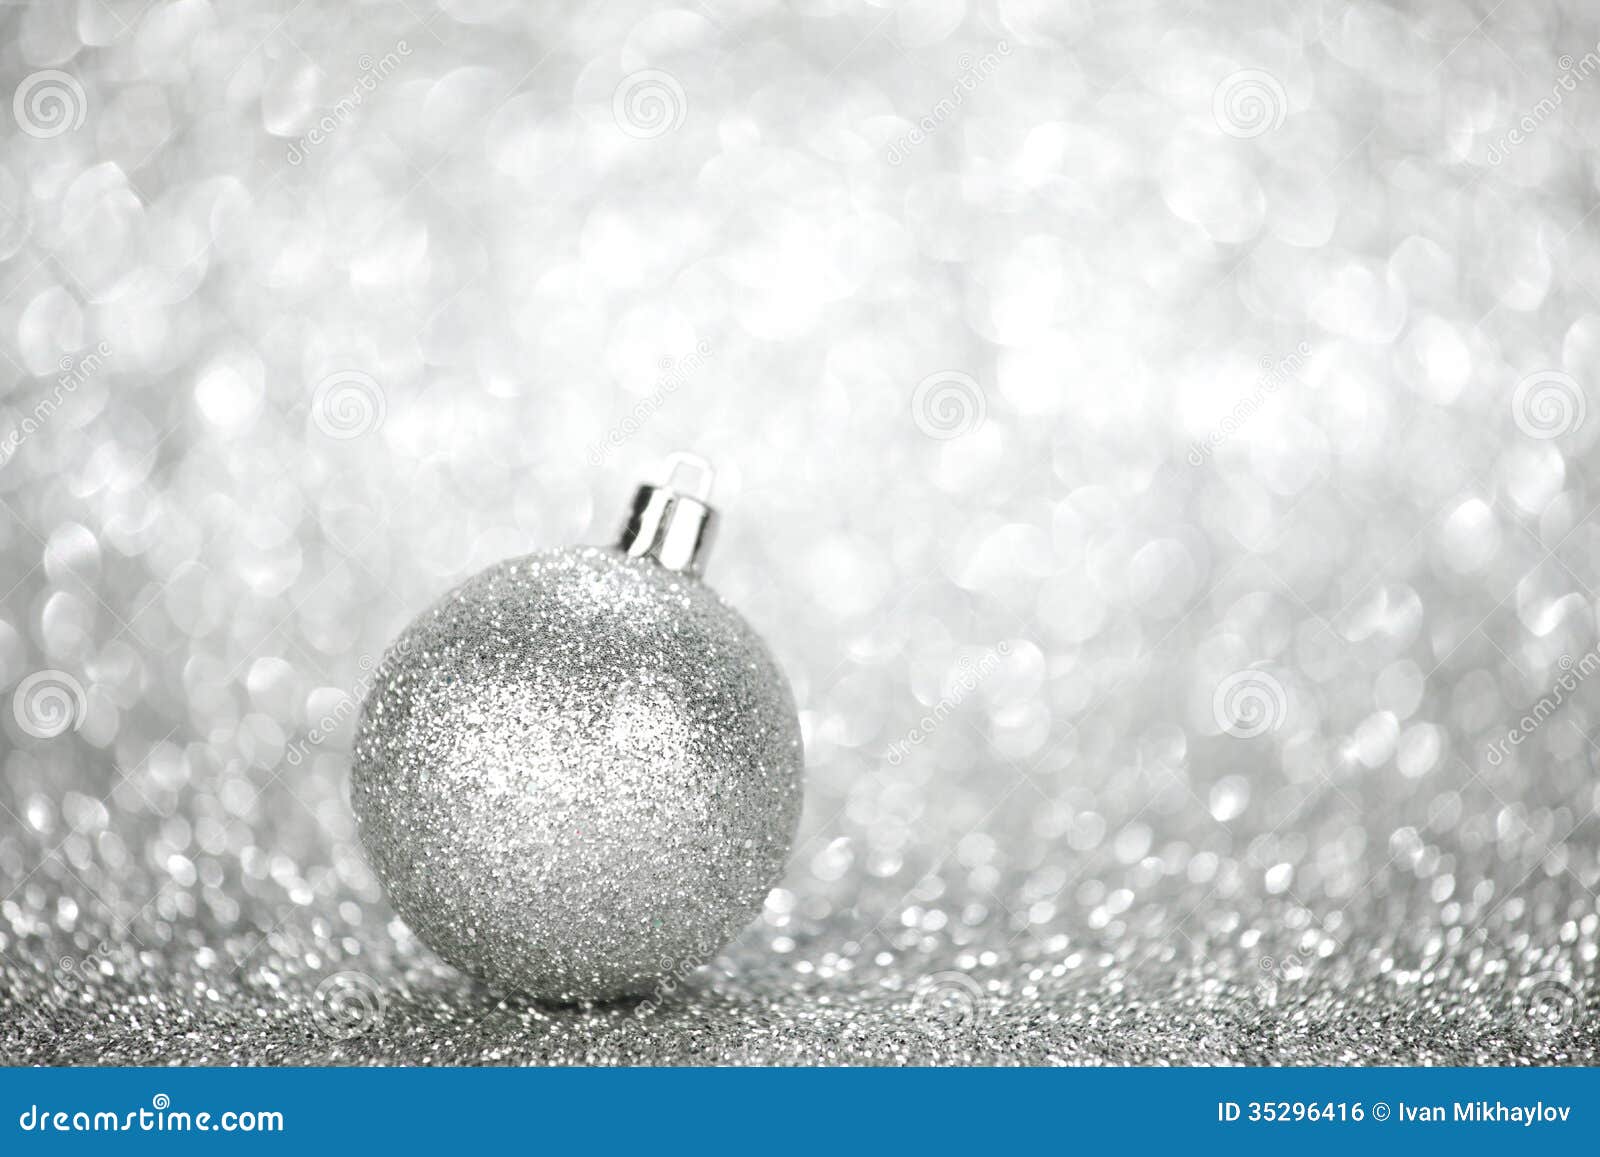 Silver christmas ball stock photo. Image of decorative - 35296416